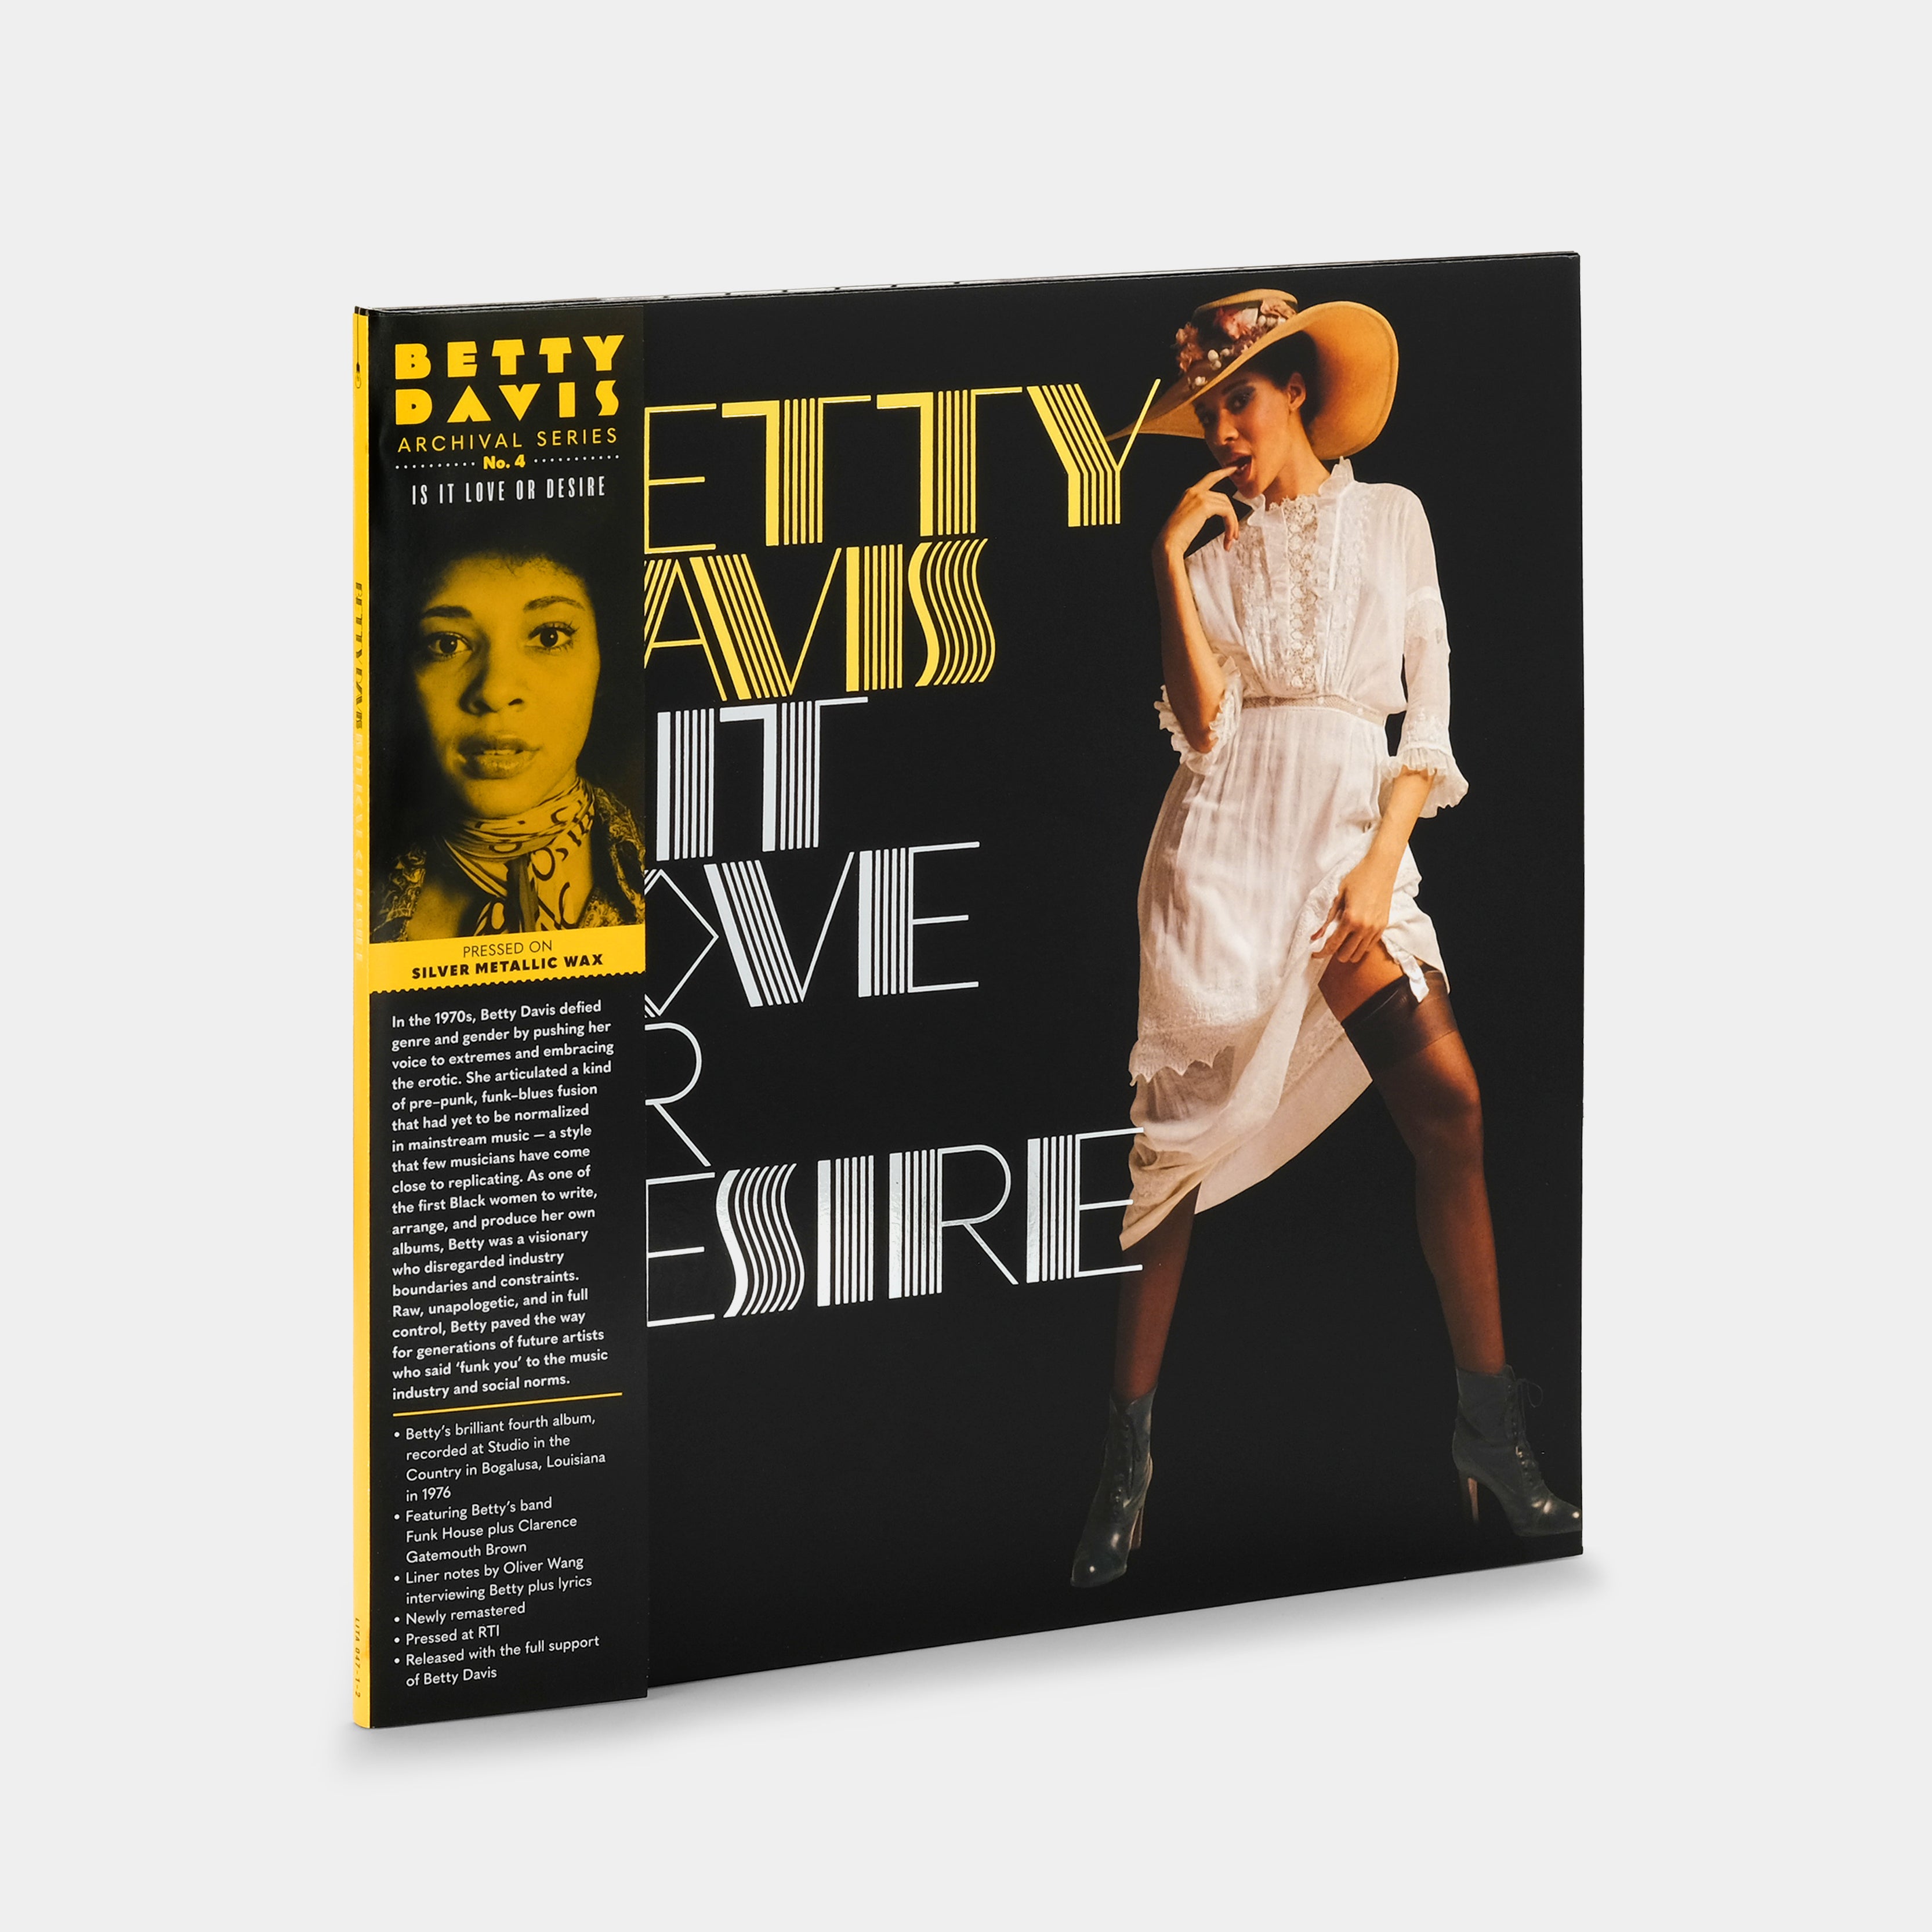 Betty Davis - Is It Love Or Desire LP Silver Metallic Vinyl Record